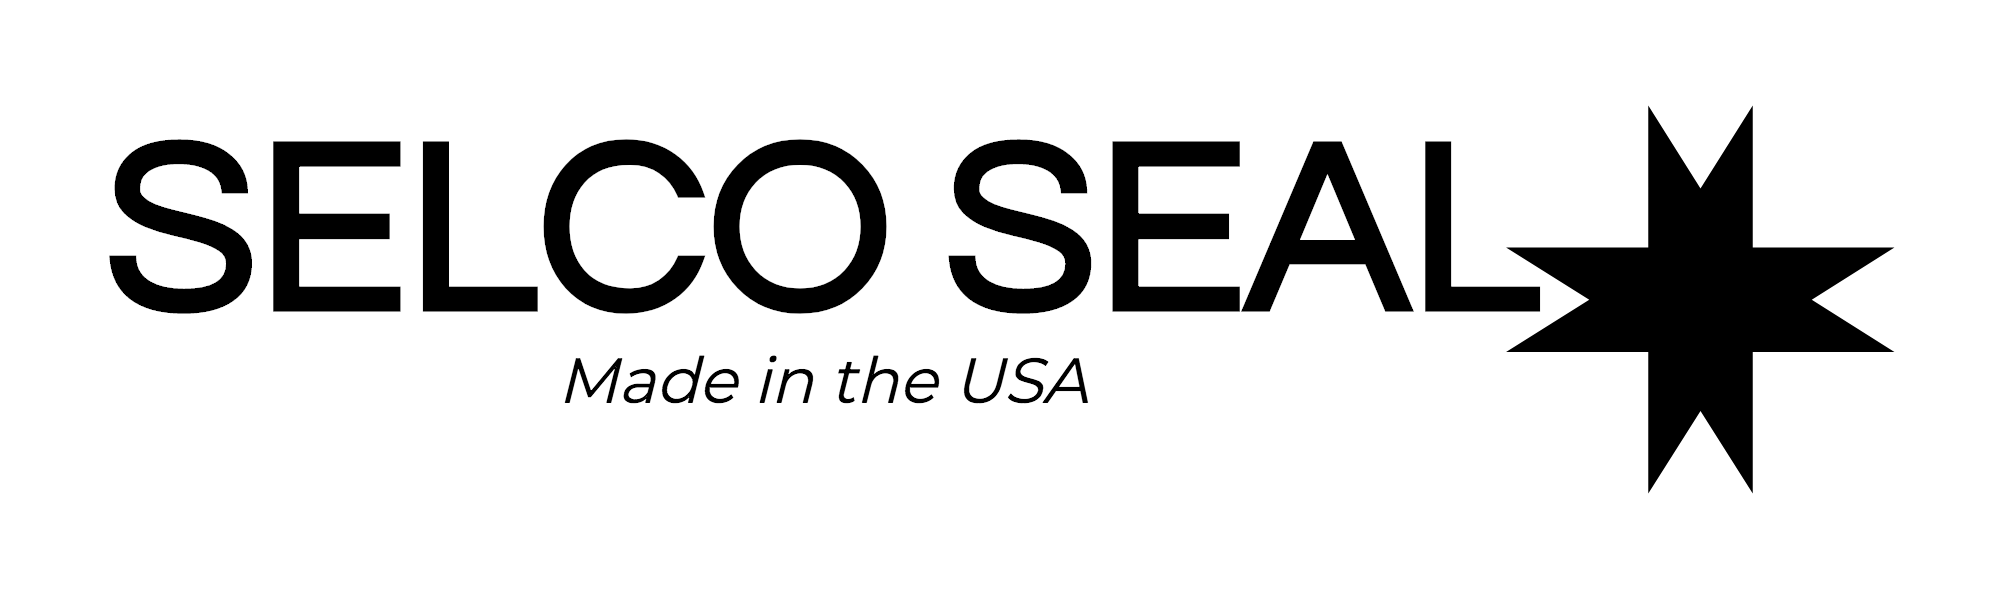 SELCO SEAL-logo-black.png